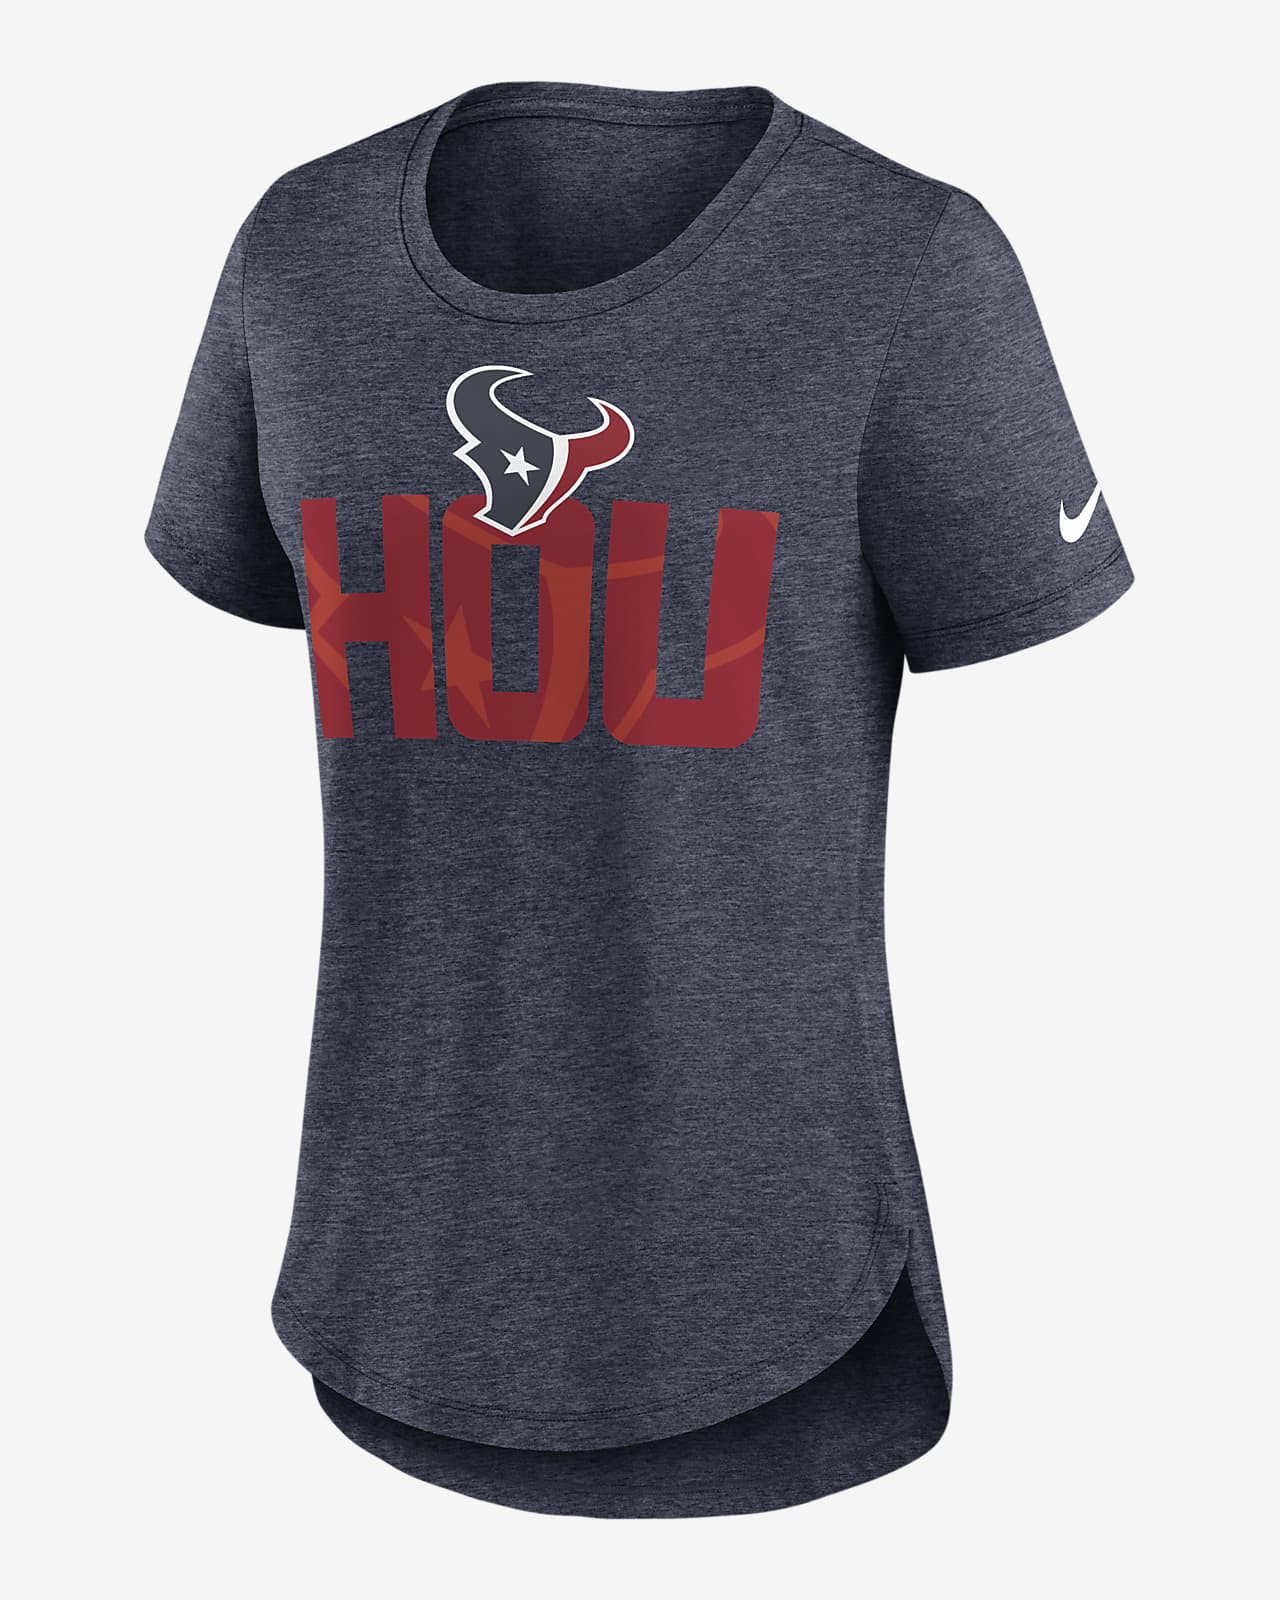 Nike Local (NFL Houston Texans) Women's T-Shirt